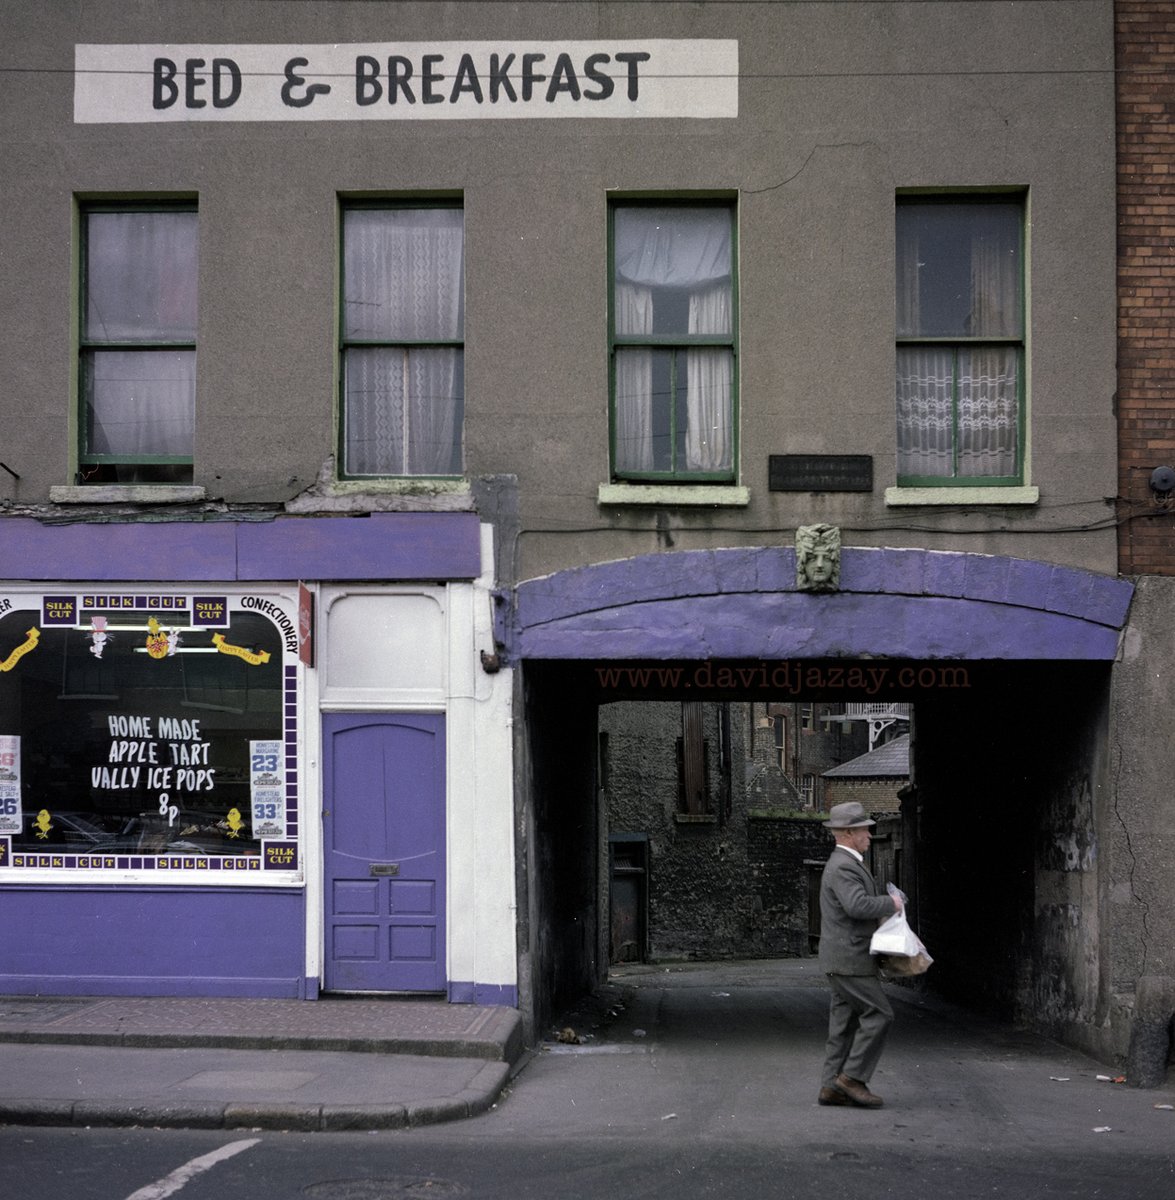 Hewardine Terrace off Amiens St, Dublin, April 1984 From #DublinBeforeTheTiger For more, please FOLLOW & REPOST ! For ltd. edition PRINTS, see header. @photosofdublin @OldDublinTown @IBN_Berlin @littlemuseumdub